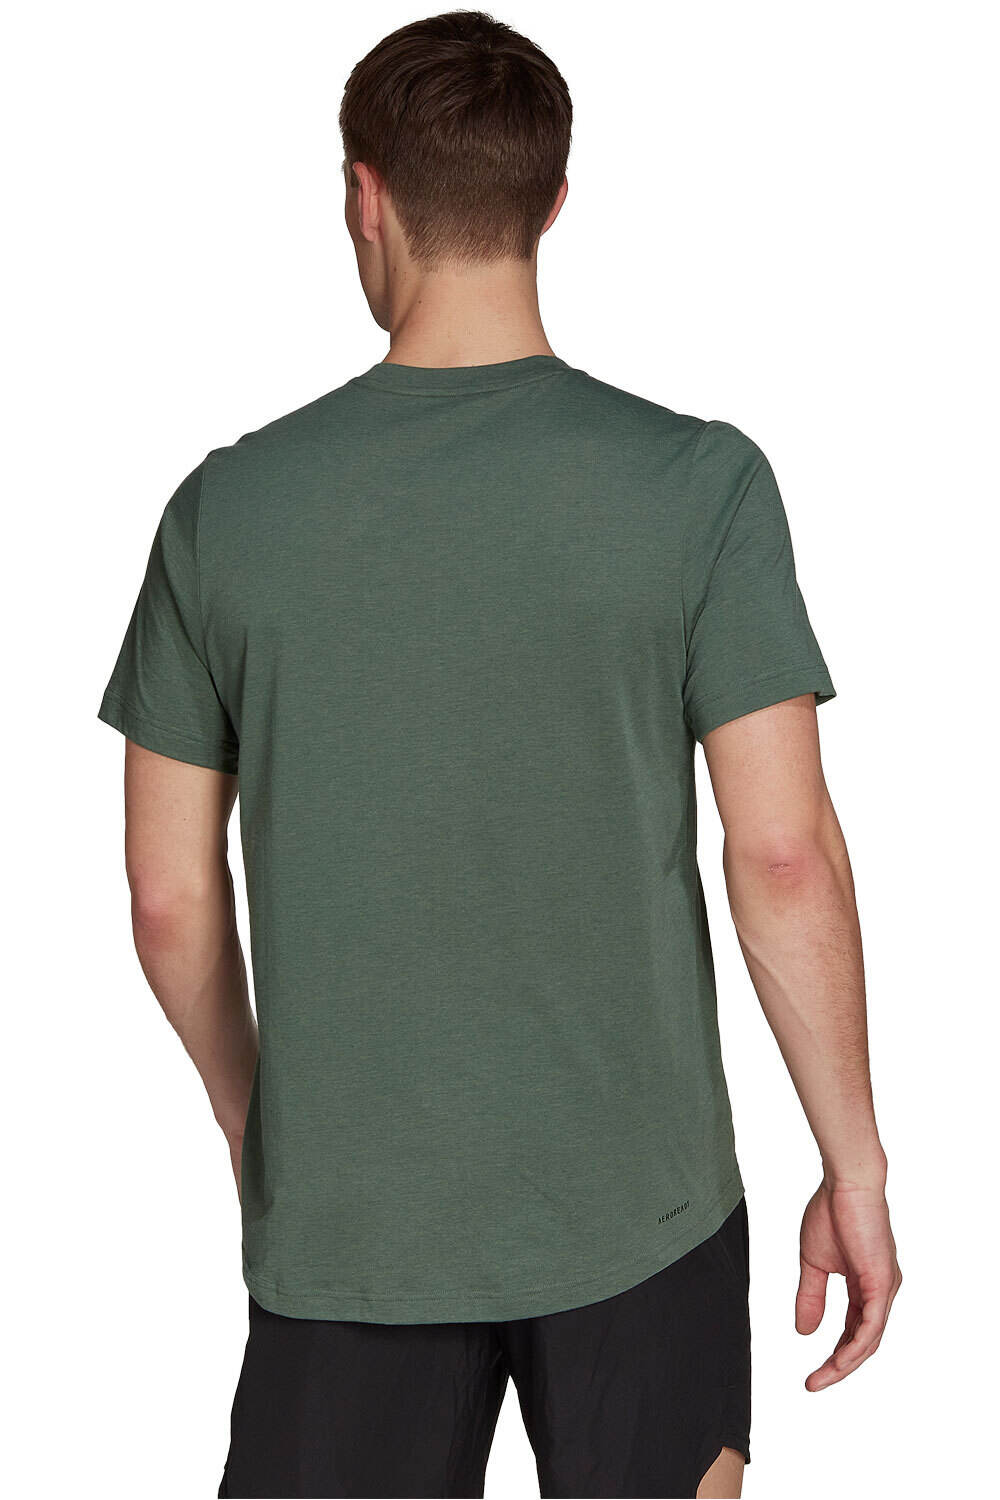 adidas camiseta fitness hombre AEROREADY Designed 2 Move Feelready Sport vista frontal